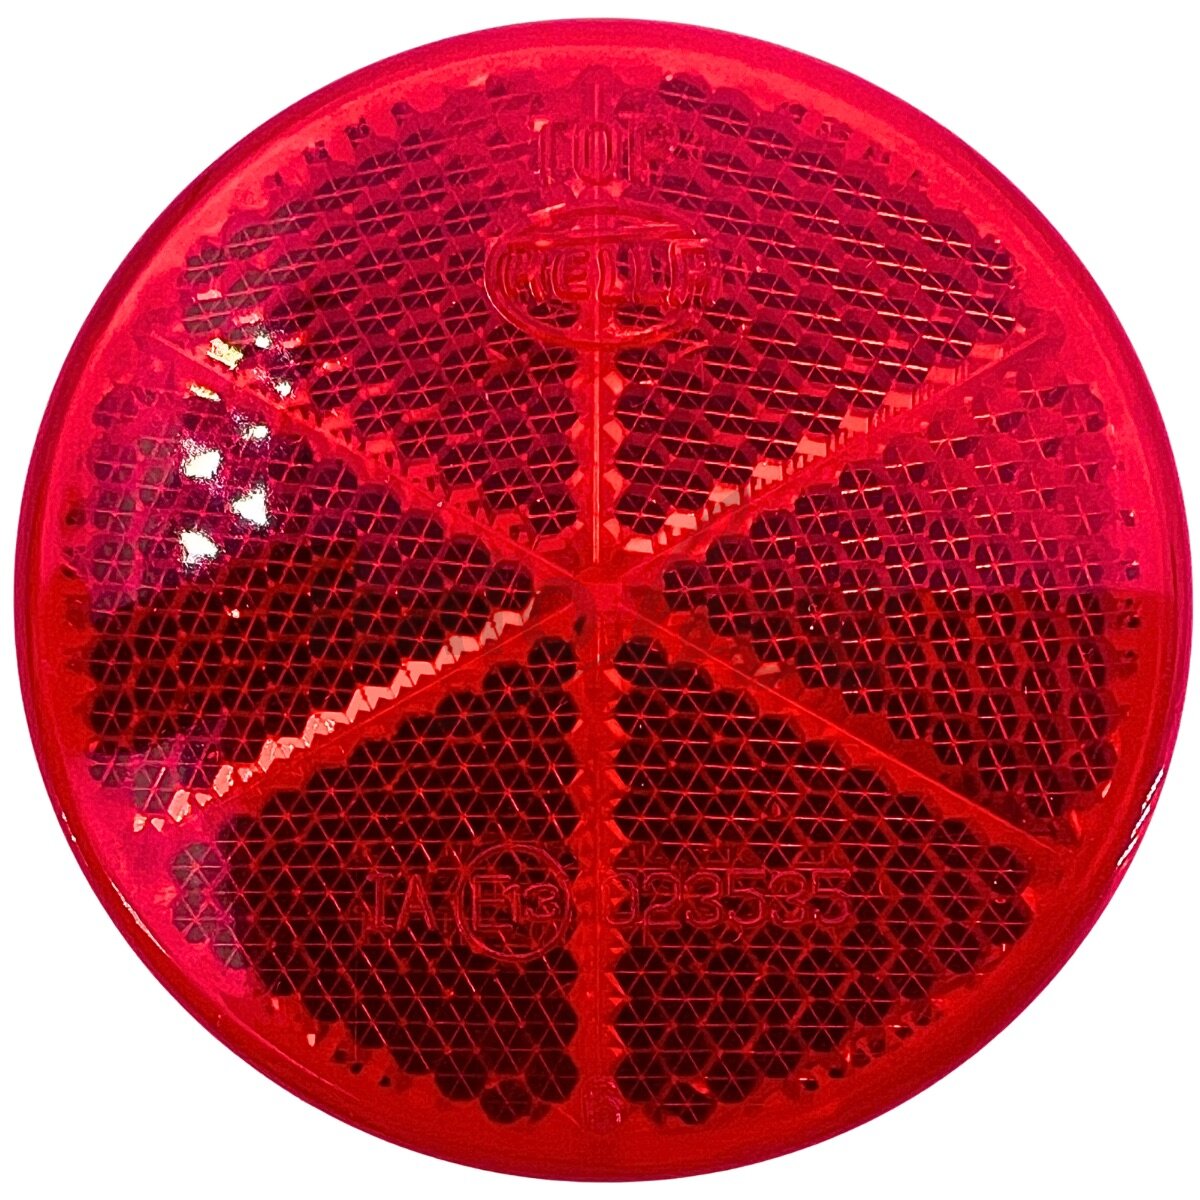 Reflektor Ø 60mm, selbstklebend, Farbe: rot - italobee Shop, 3,57 €